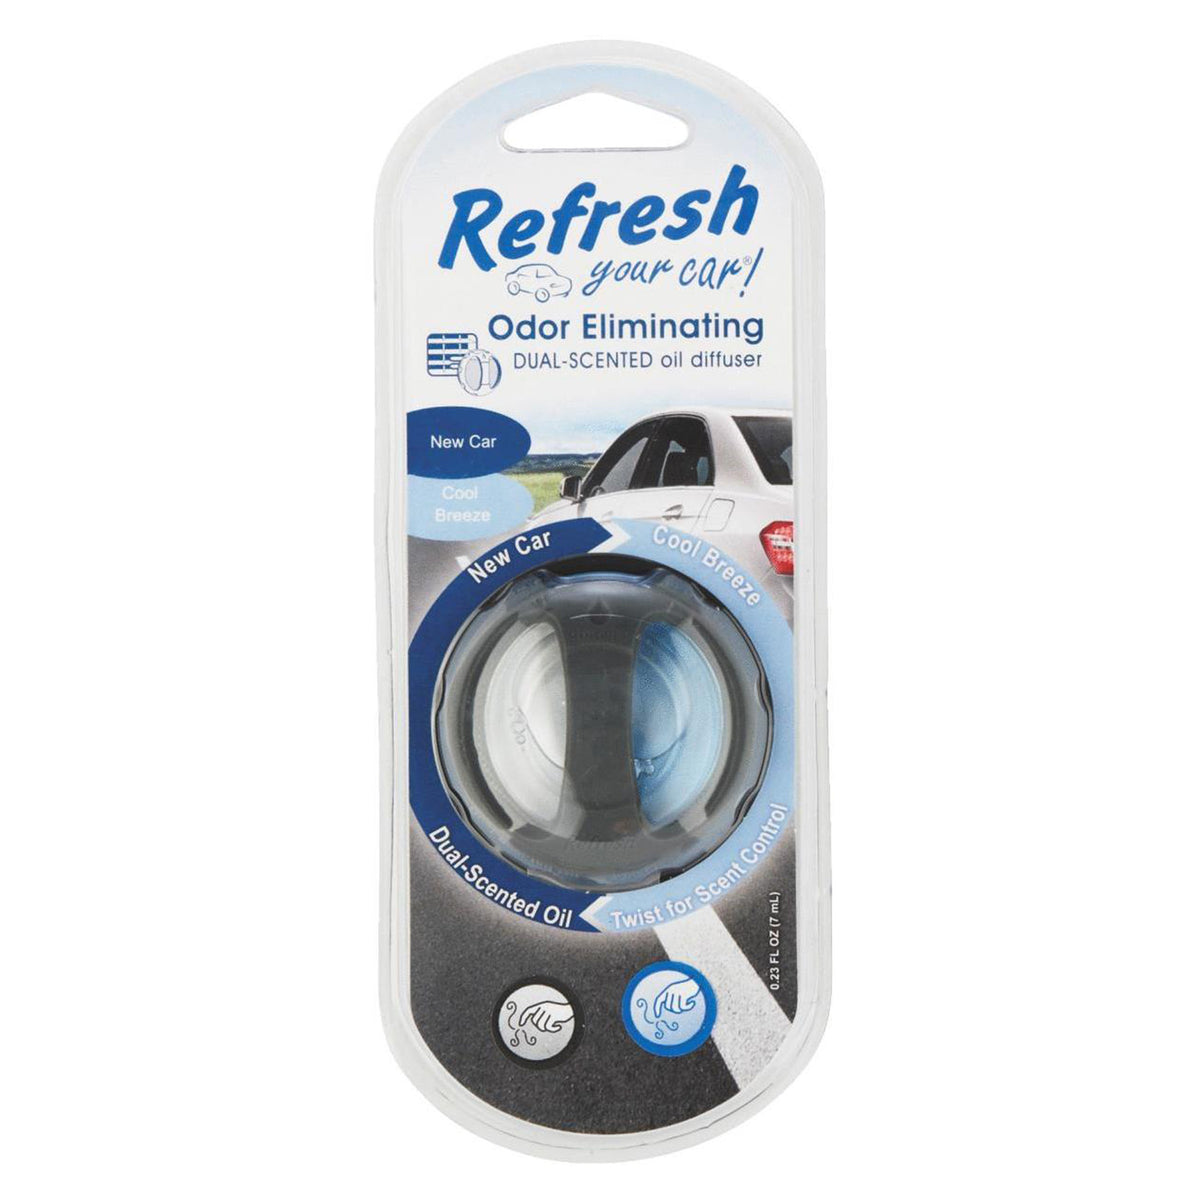 Auto Air Freshener Vent Clip-On Oil DiffusersCool breeze scent